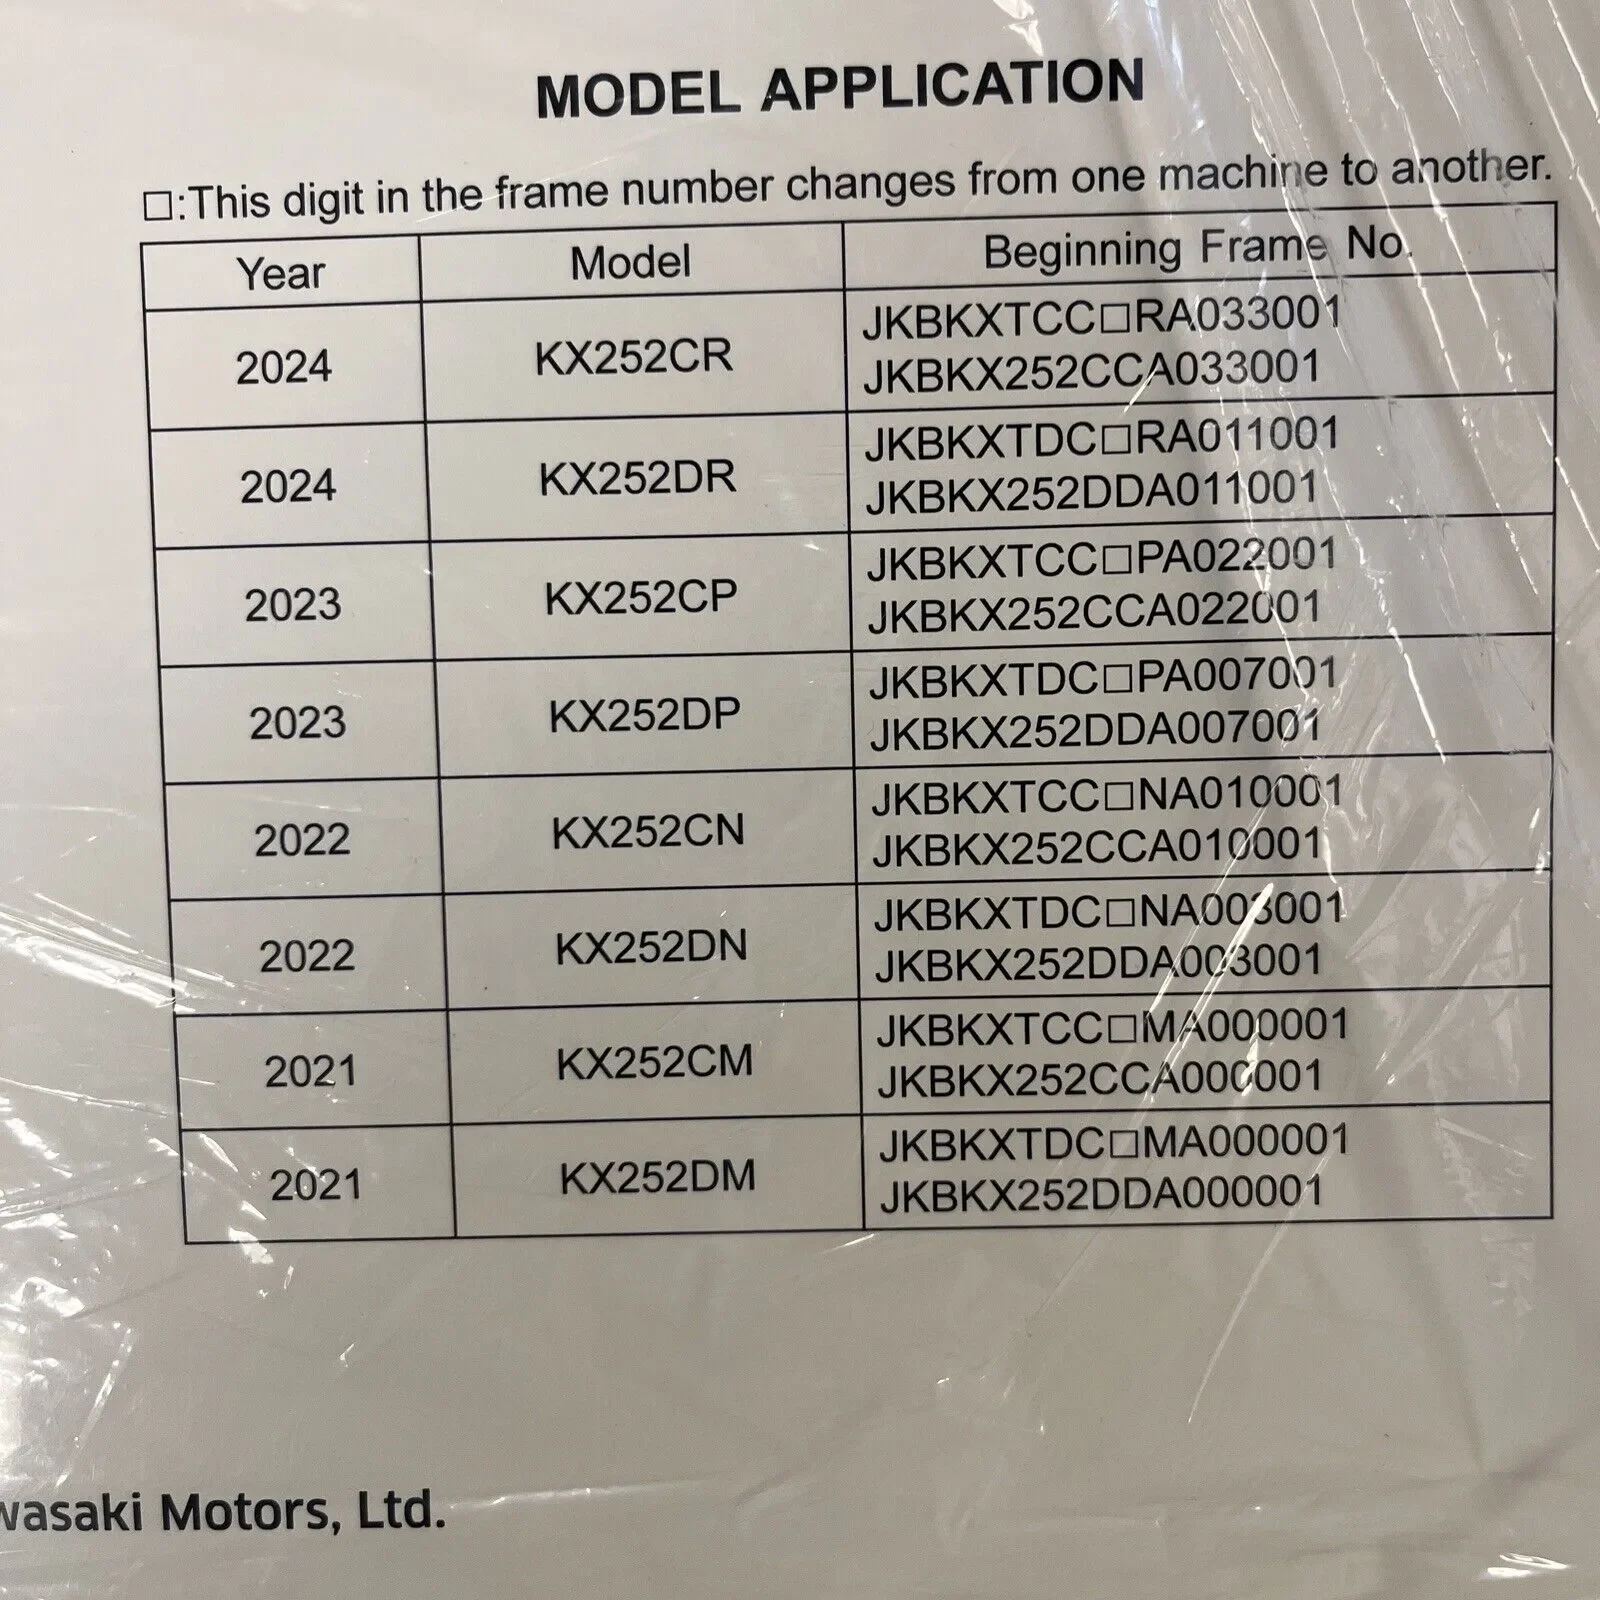 Kawasaki OEM Genuine Service Manual For KX250 KX250X 2021-2024